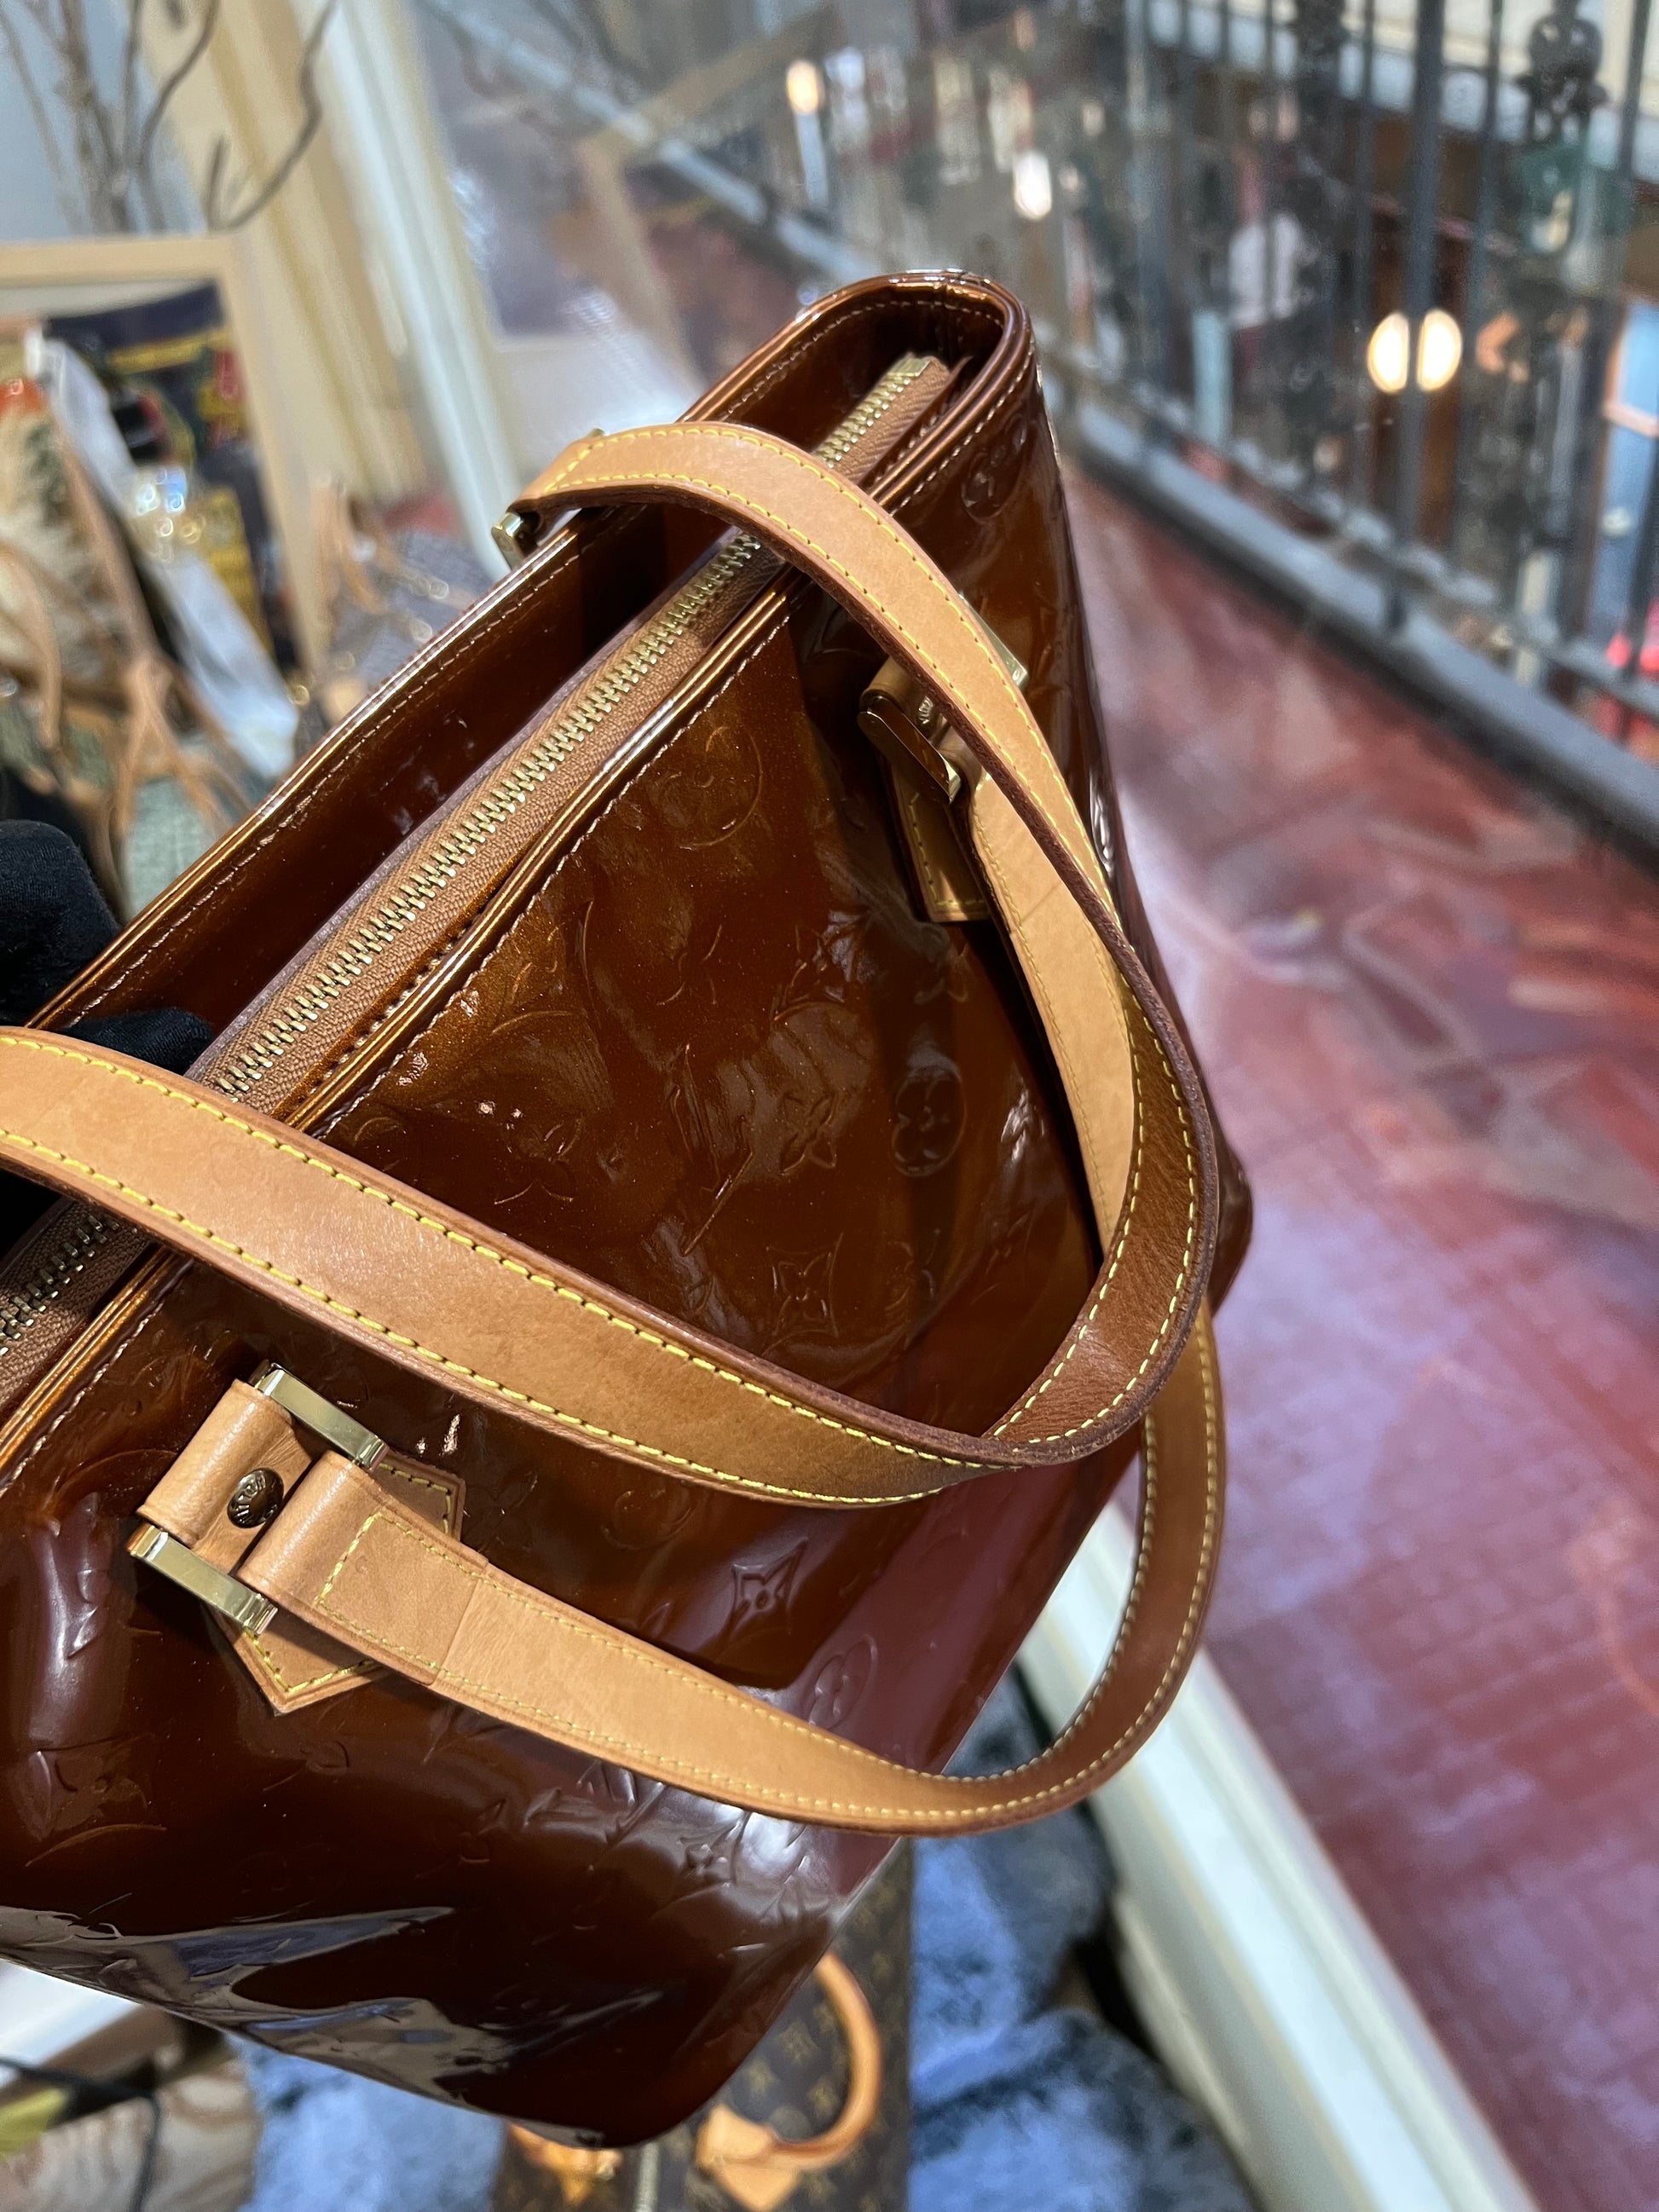 Houston Monogram Vernis Leather Shoulder Bag (Authentic Pre-Owned)